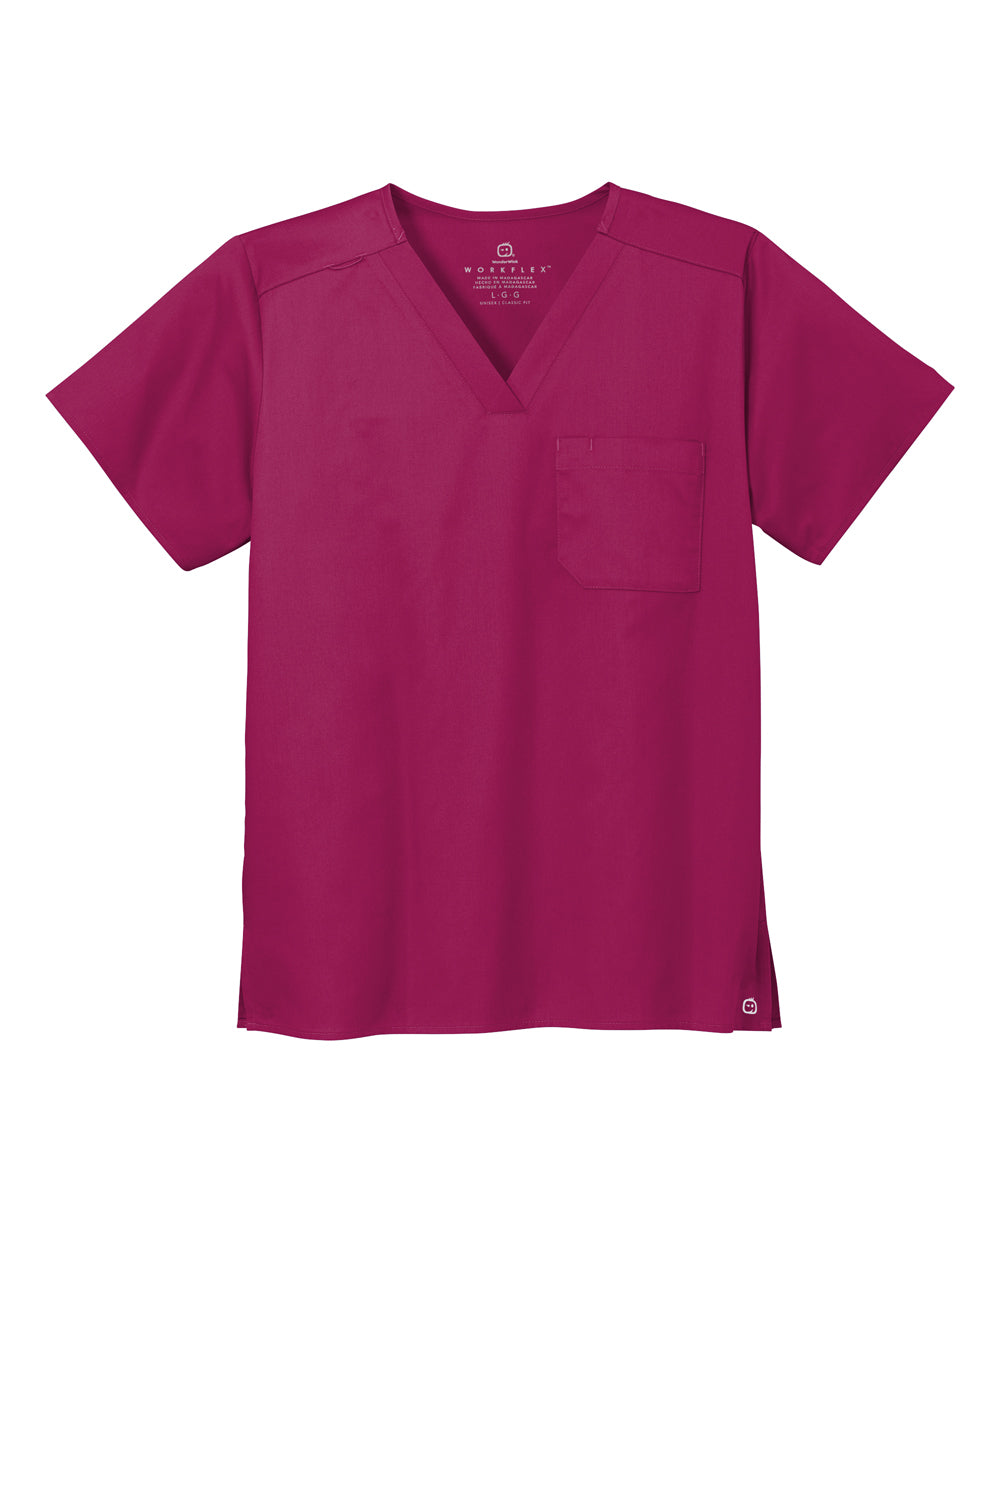 Wonderwink WW3160 WorkFlex Short Sleeve V-Neck Shirt w/ Pocket Wine Flat Front